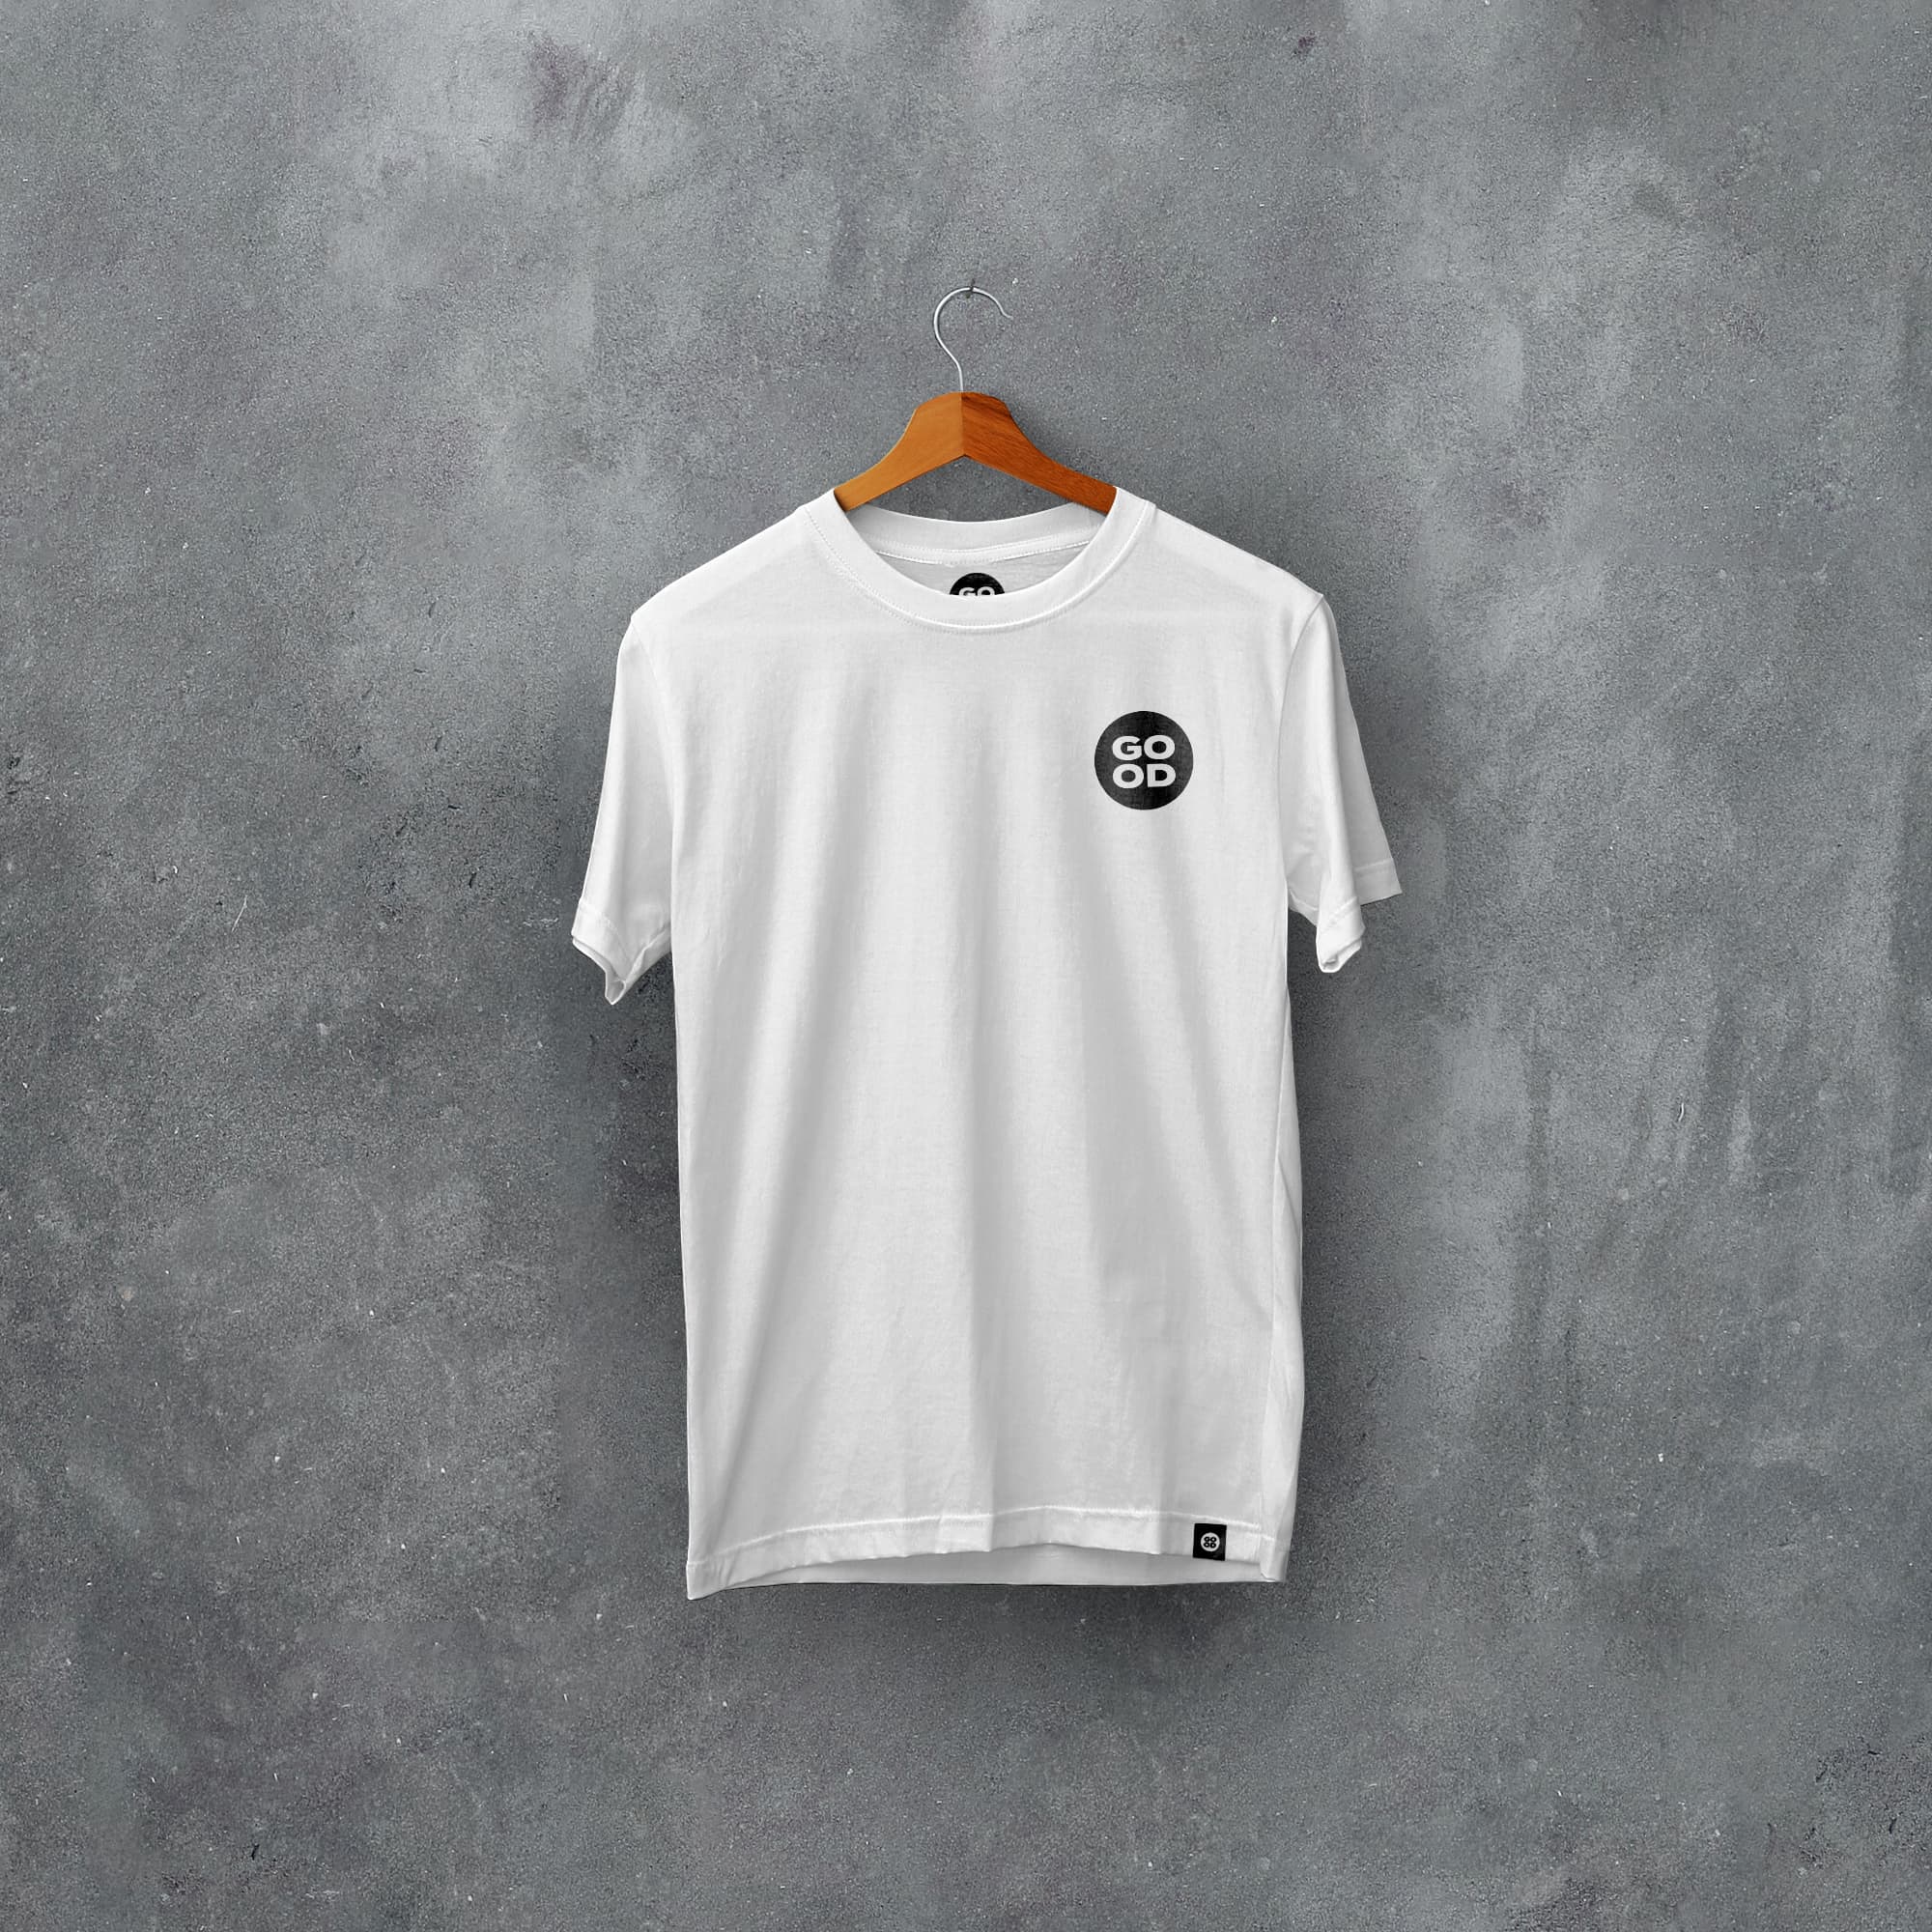 Tranmere Classic Kits Football T-Shirt